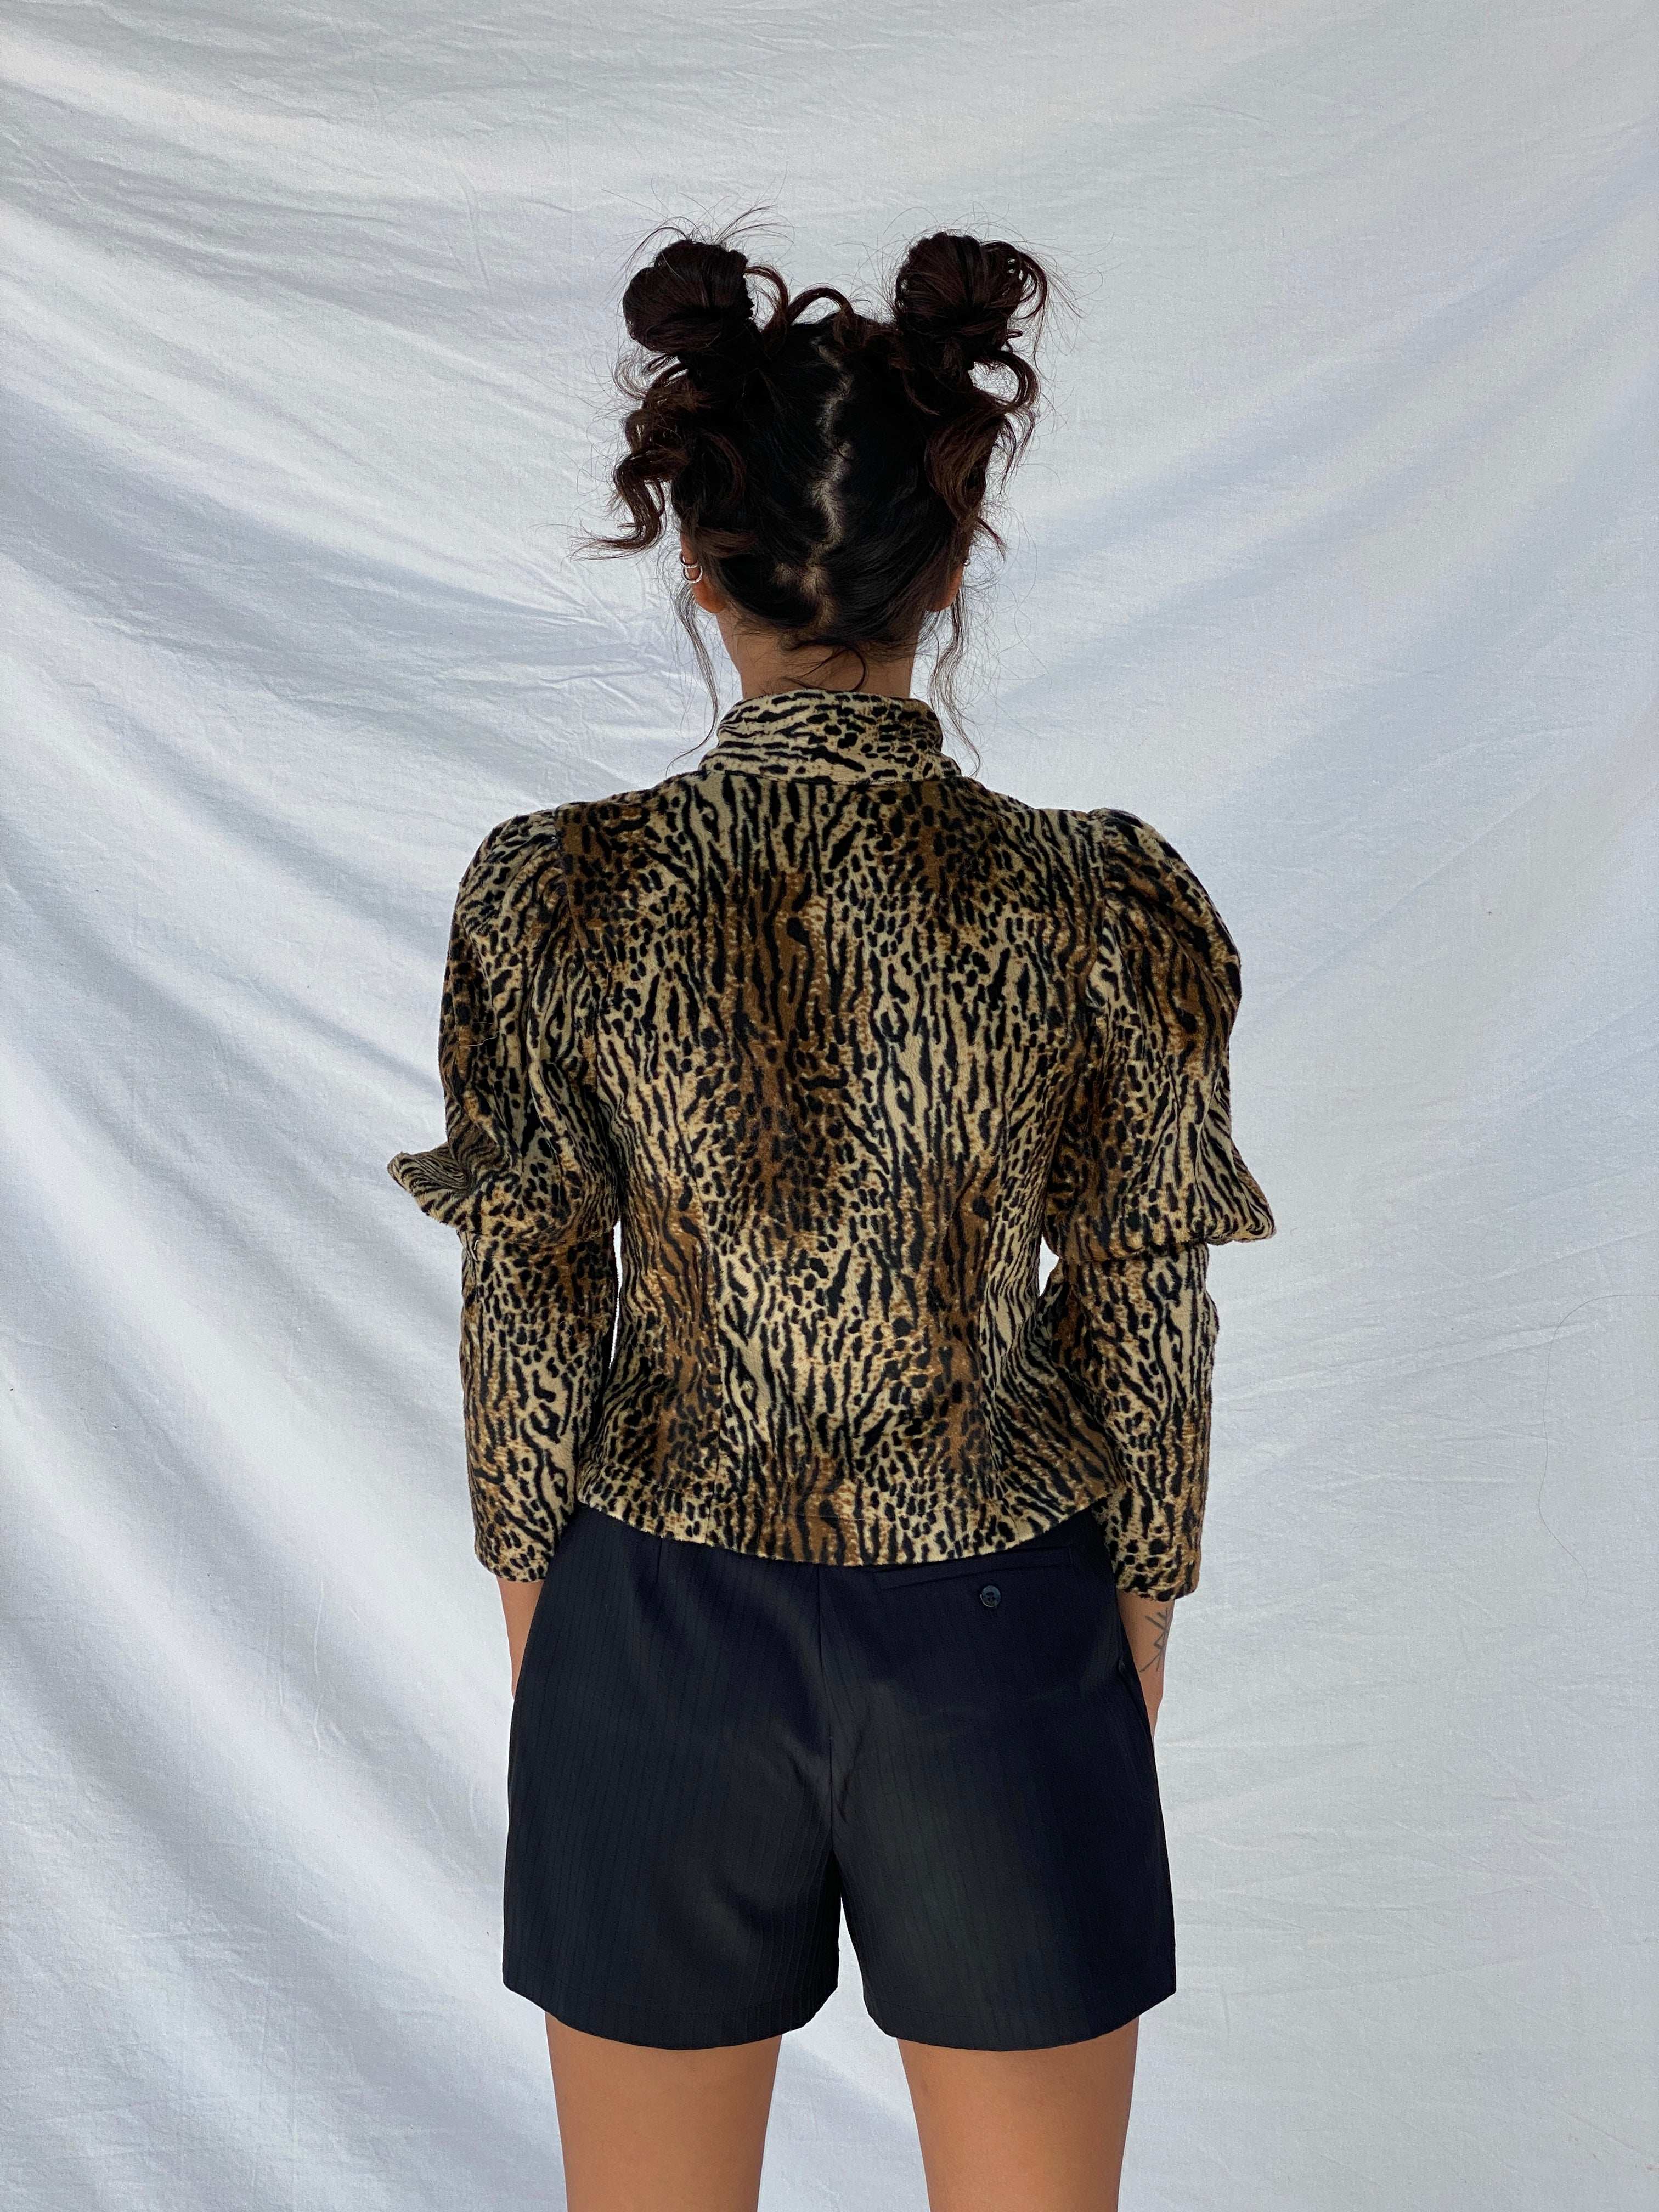 Vintage Handmade Leopard Print Top - Size XS - Balagan Vintage Full Sleeve Top 00s, 90s, full sleeve top, Tojan, winter